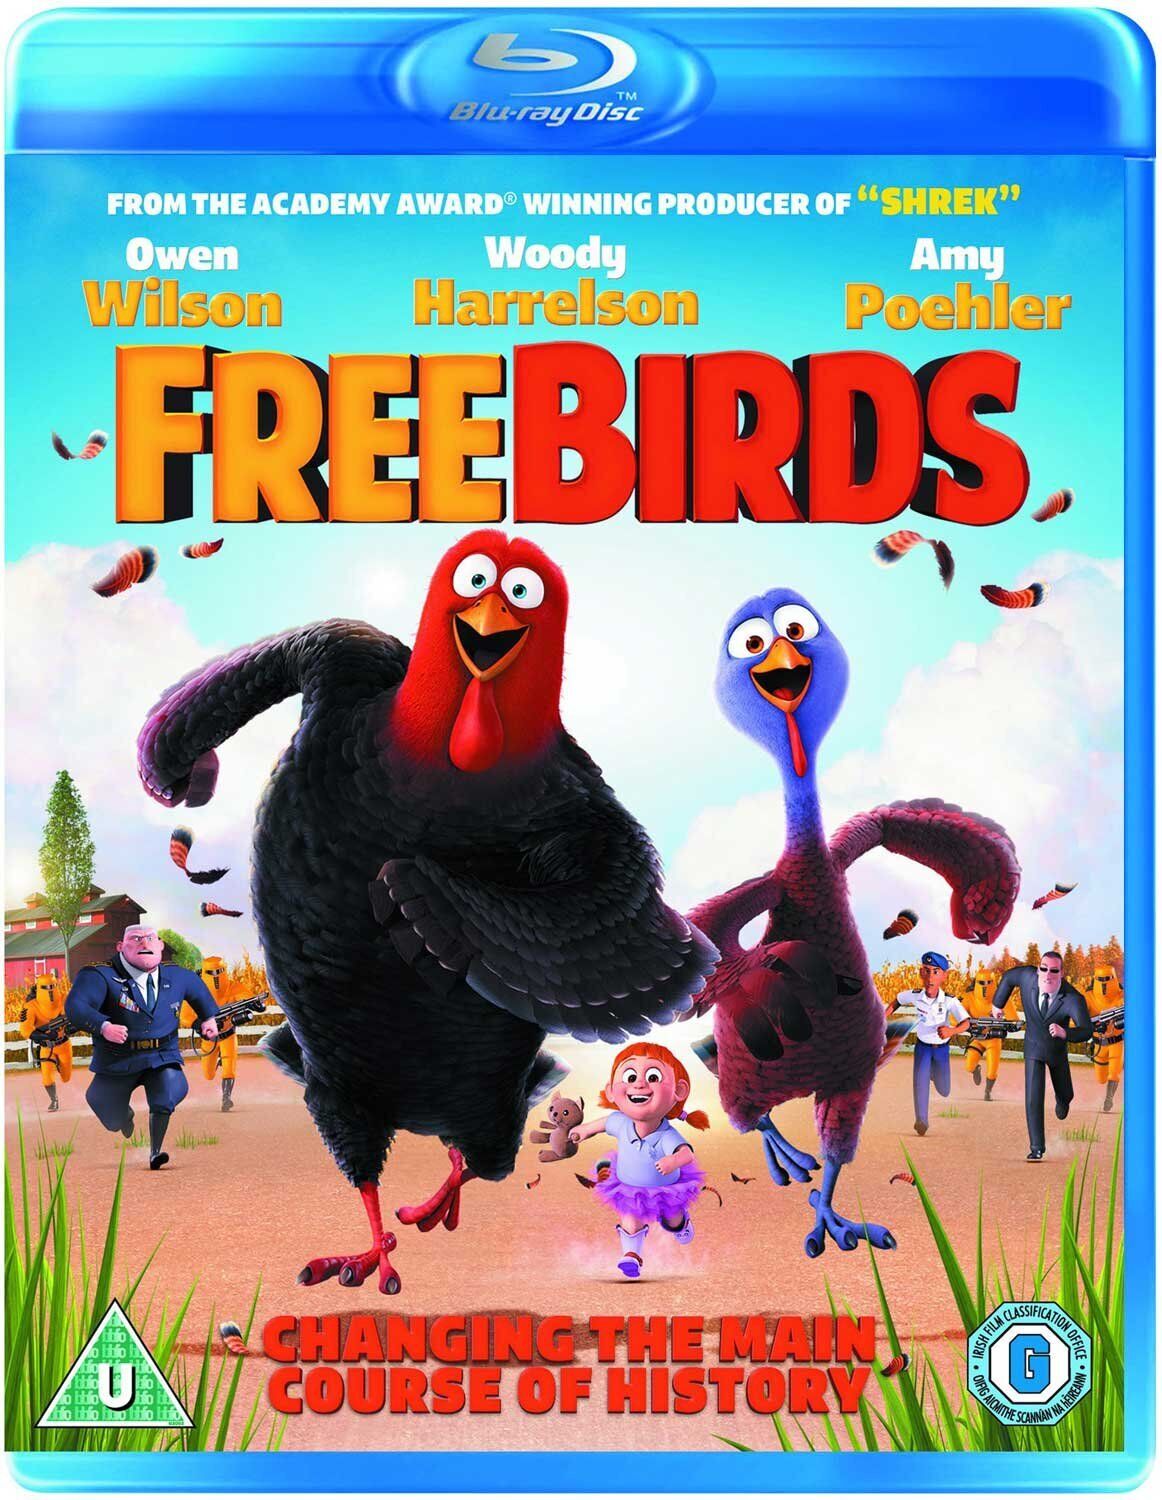 Free Birds [Blu-ray] W/ Owen Wilson/Woody Harrelson/Amy Poehler